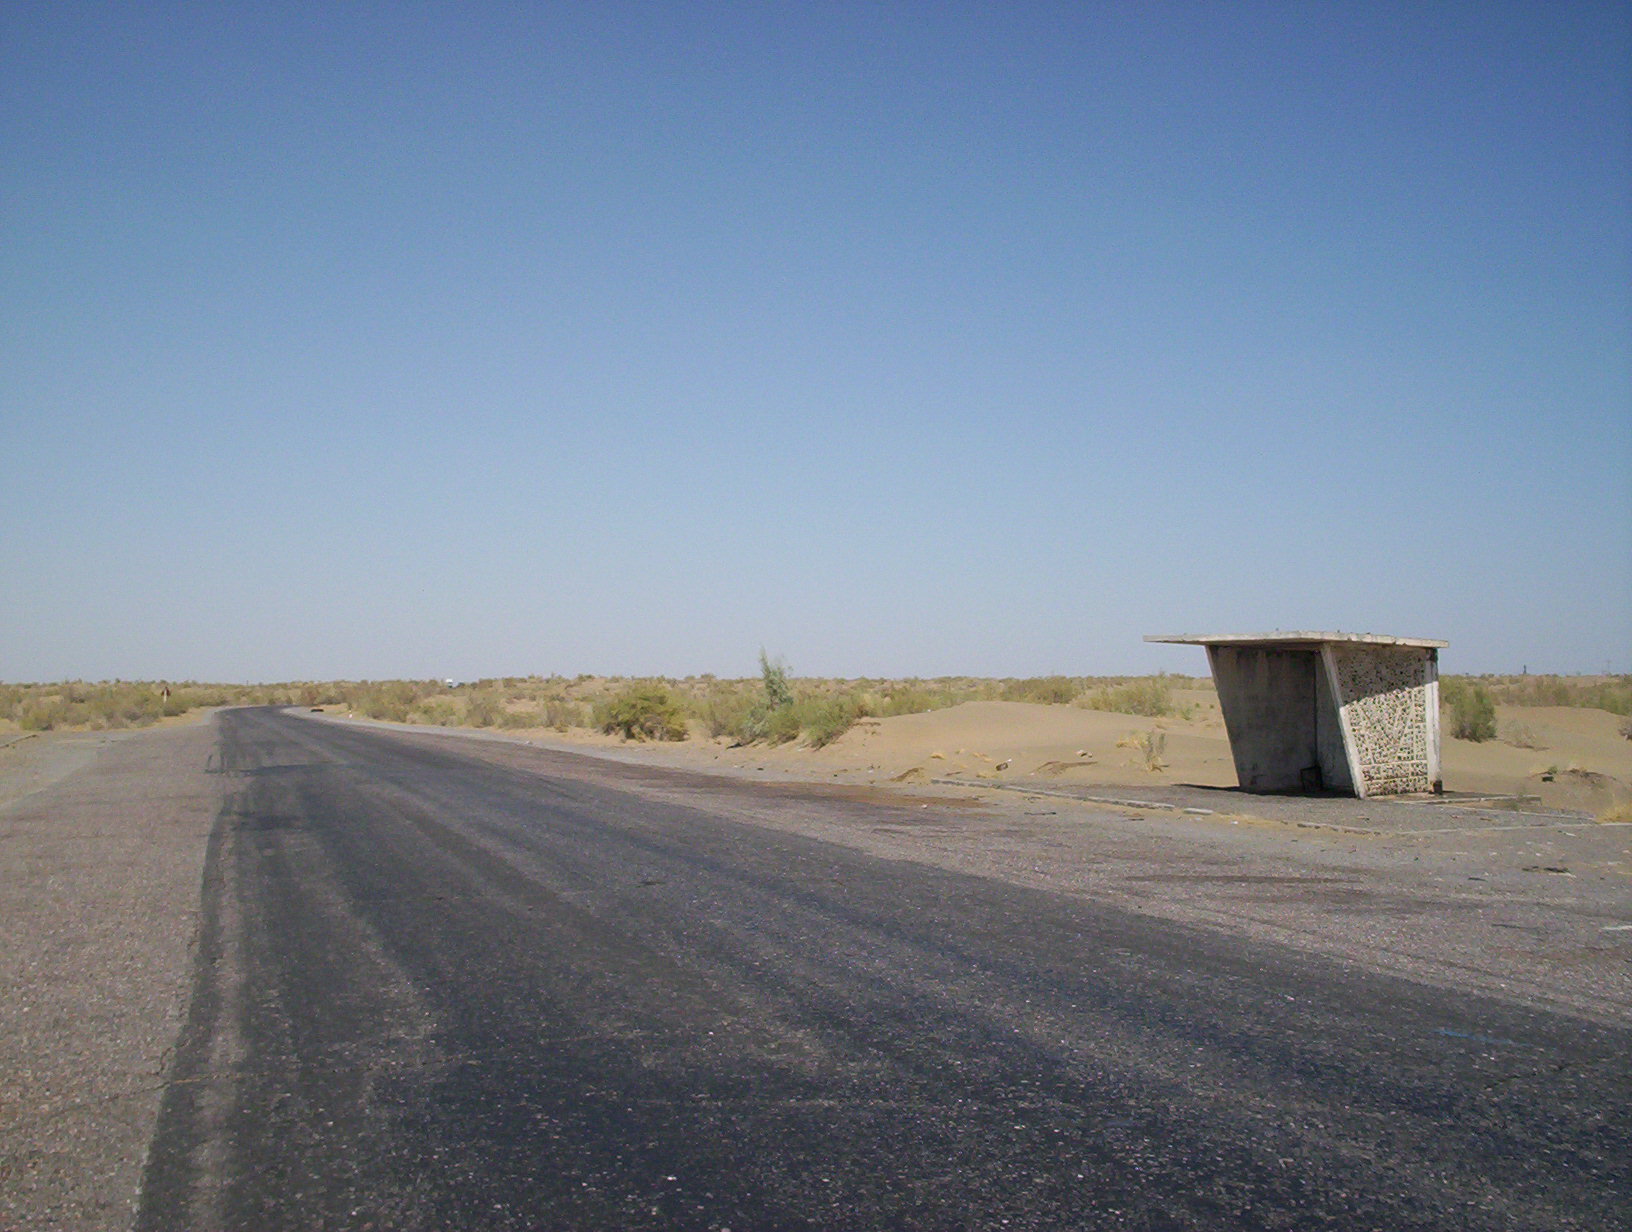 Crossing into Turkmenistan at Farab